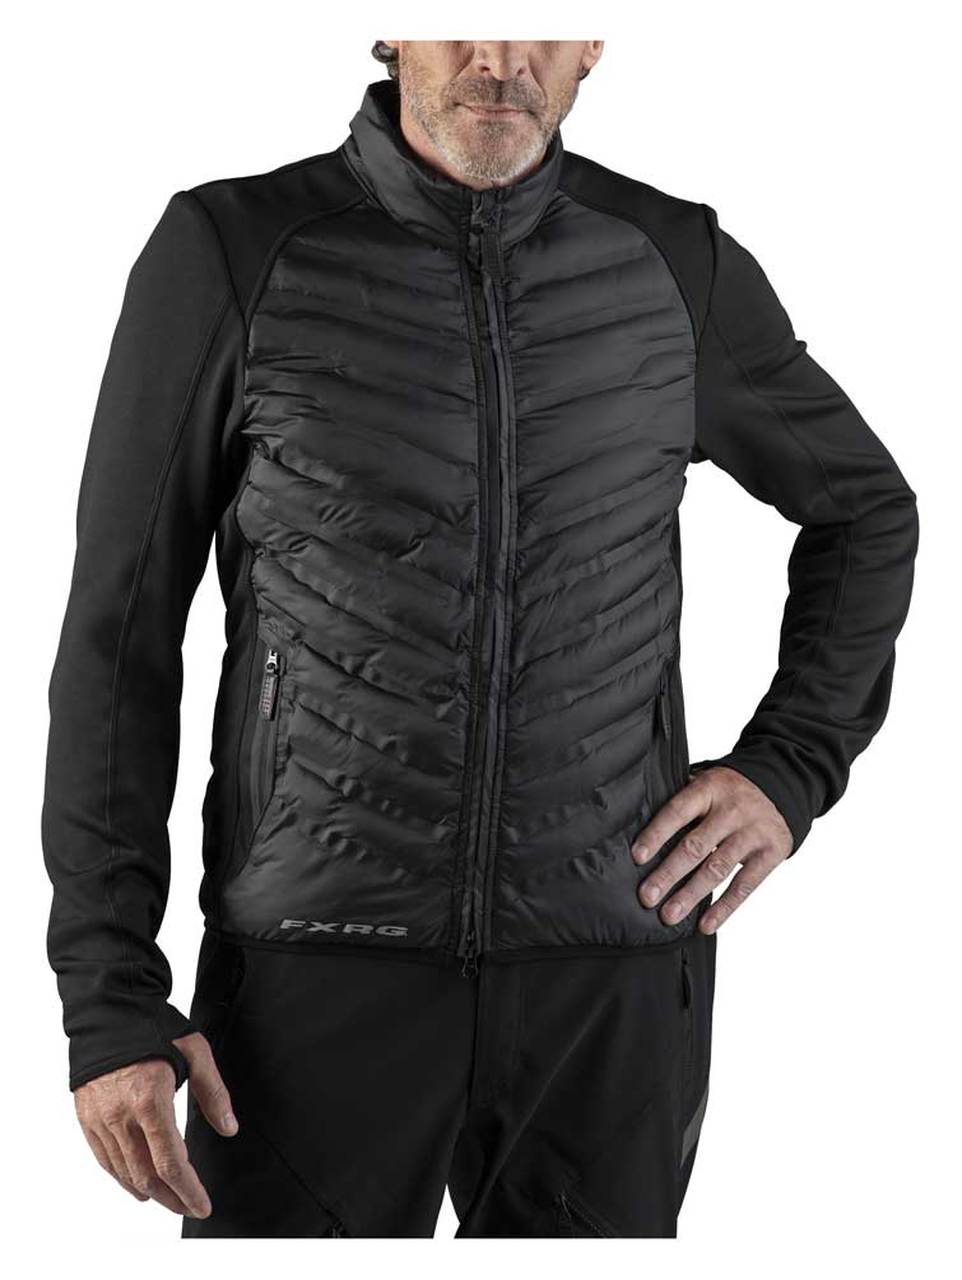 Harley-Davidson® Men's FXRG Thinsulate Mid-Layer Jacket, Black